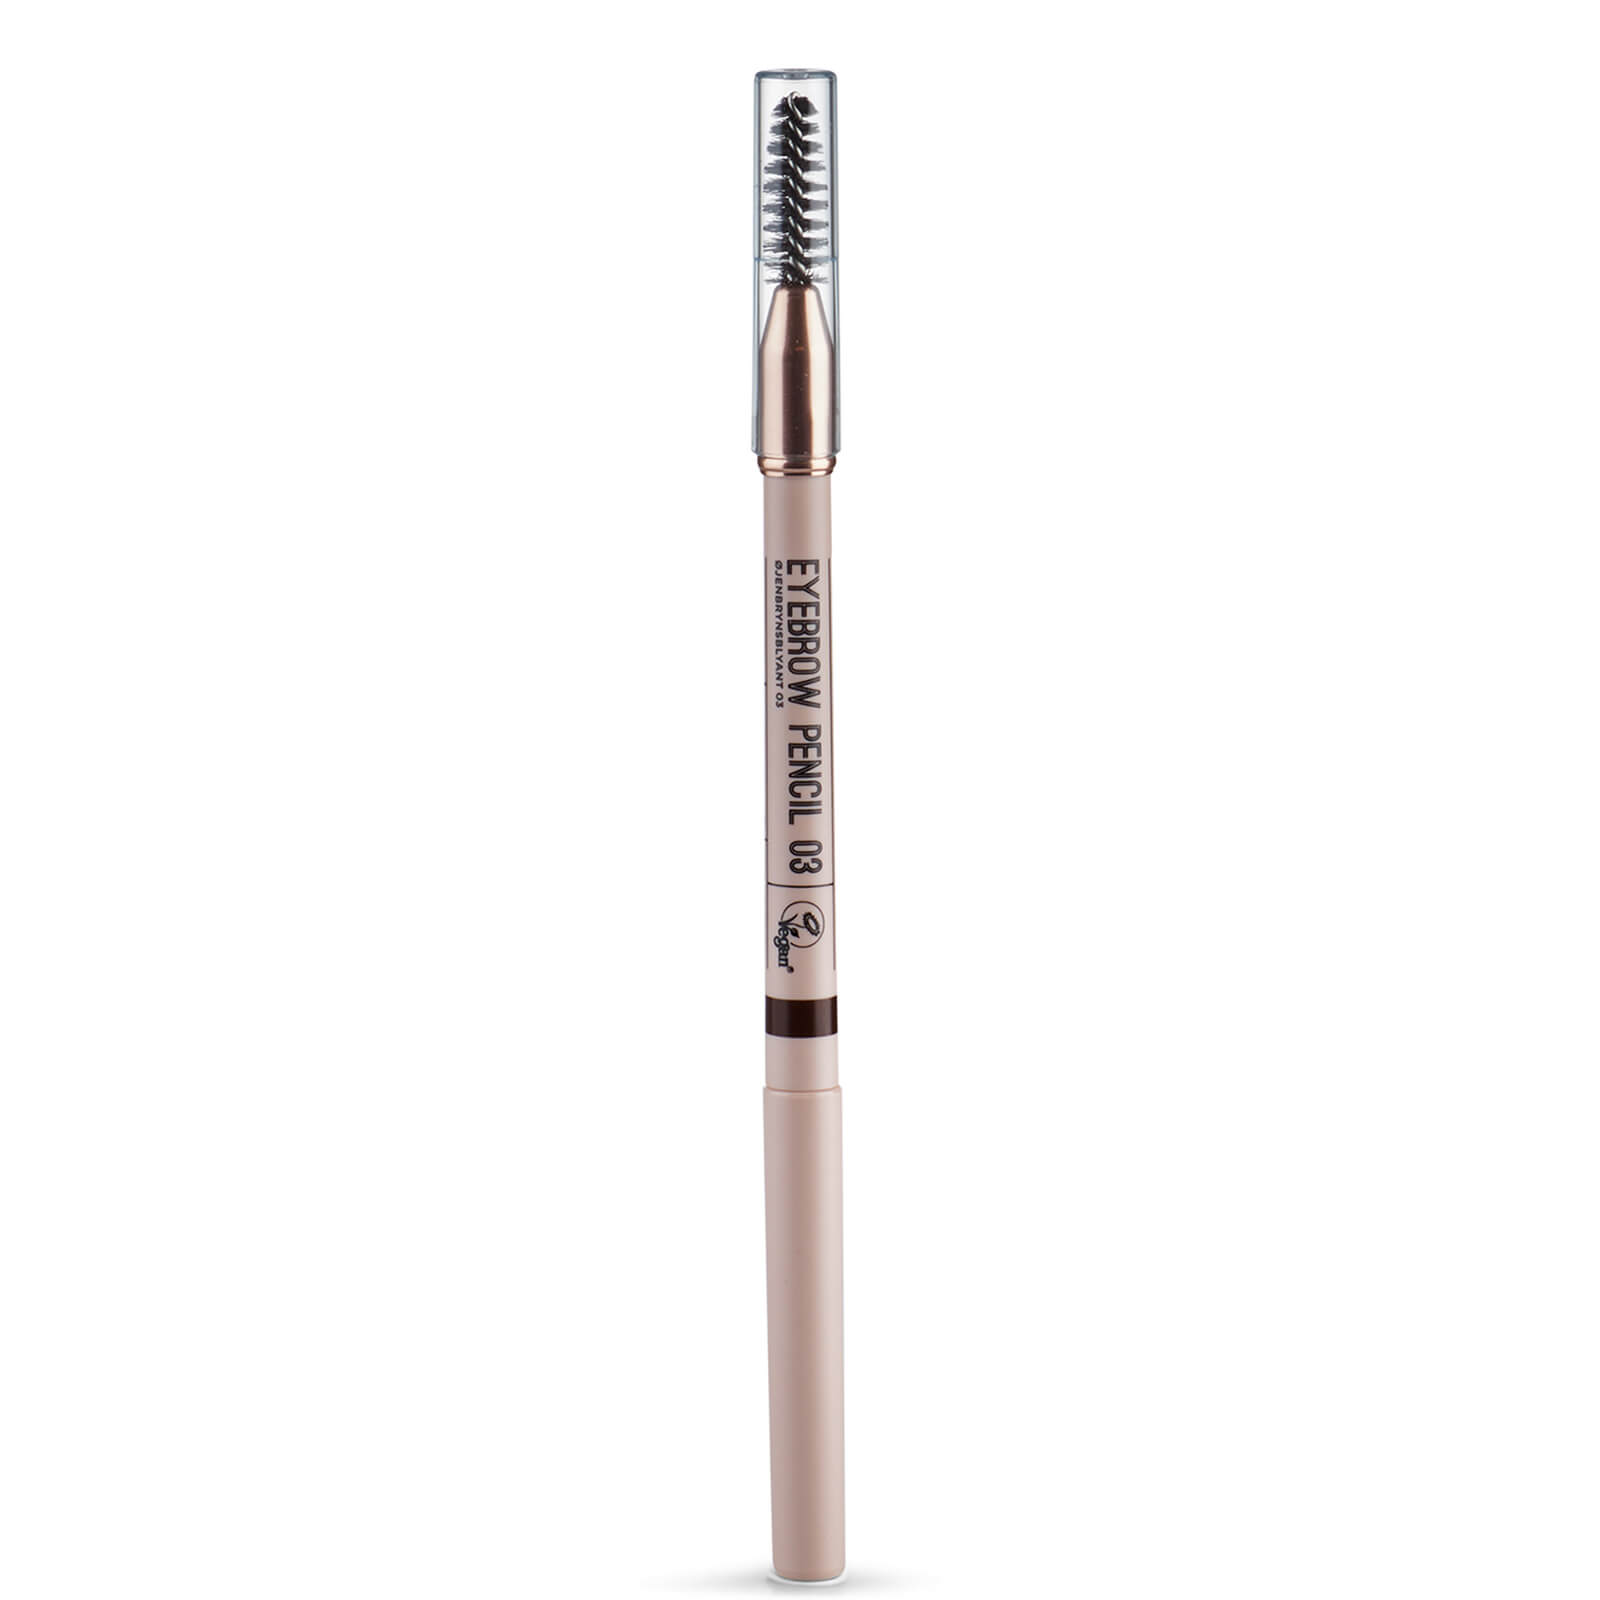 Ecooking Eyebrow Pencil 1.1g (Various Shades) - 03 Dark Brown